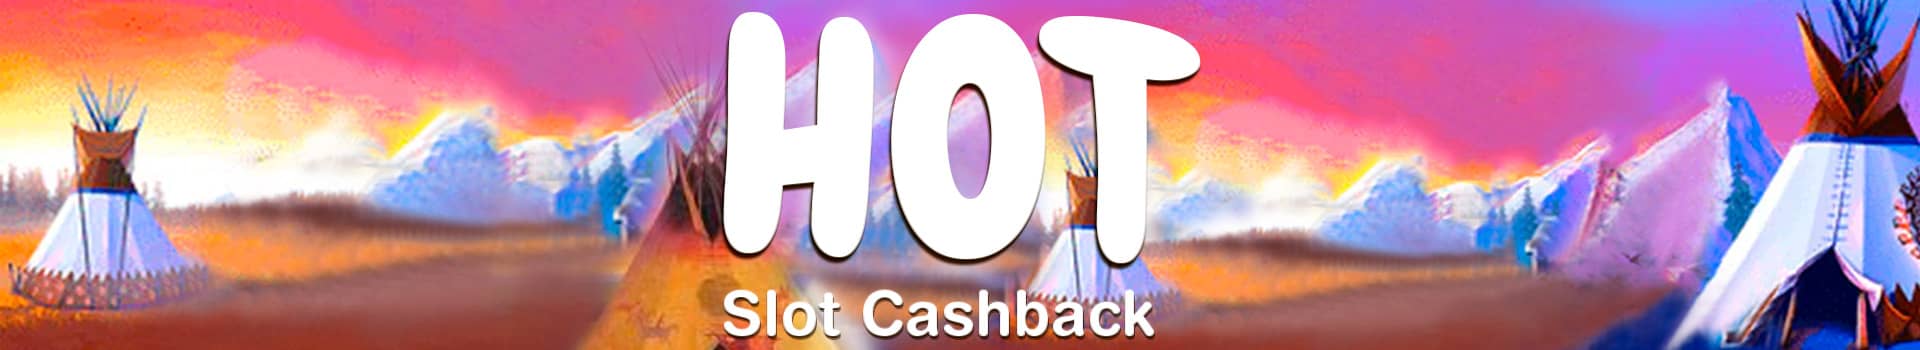 Hot Slot Cashback reward at CyberBingo